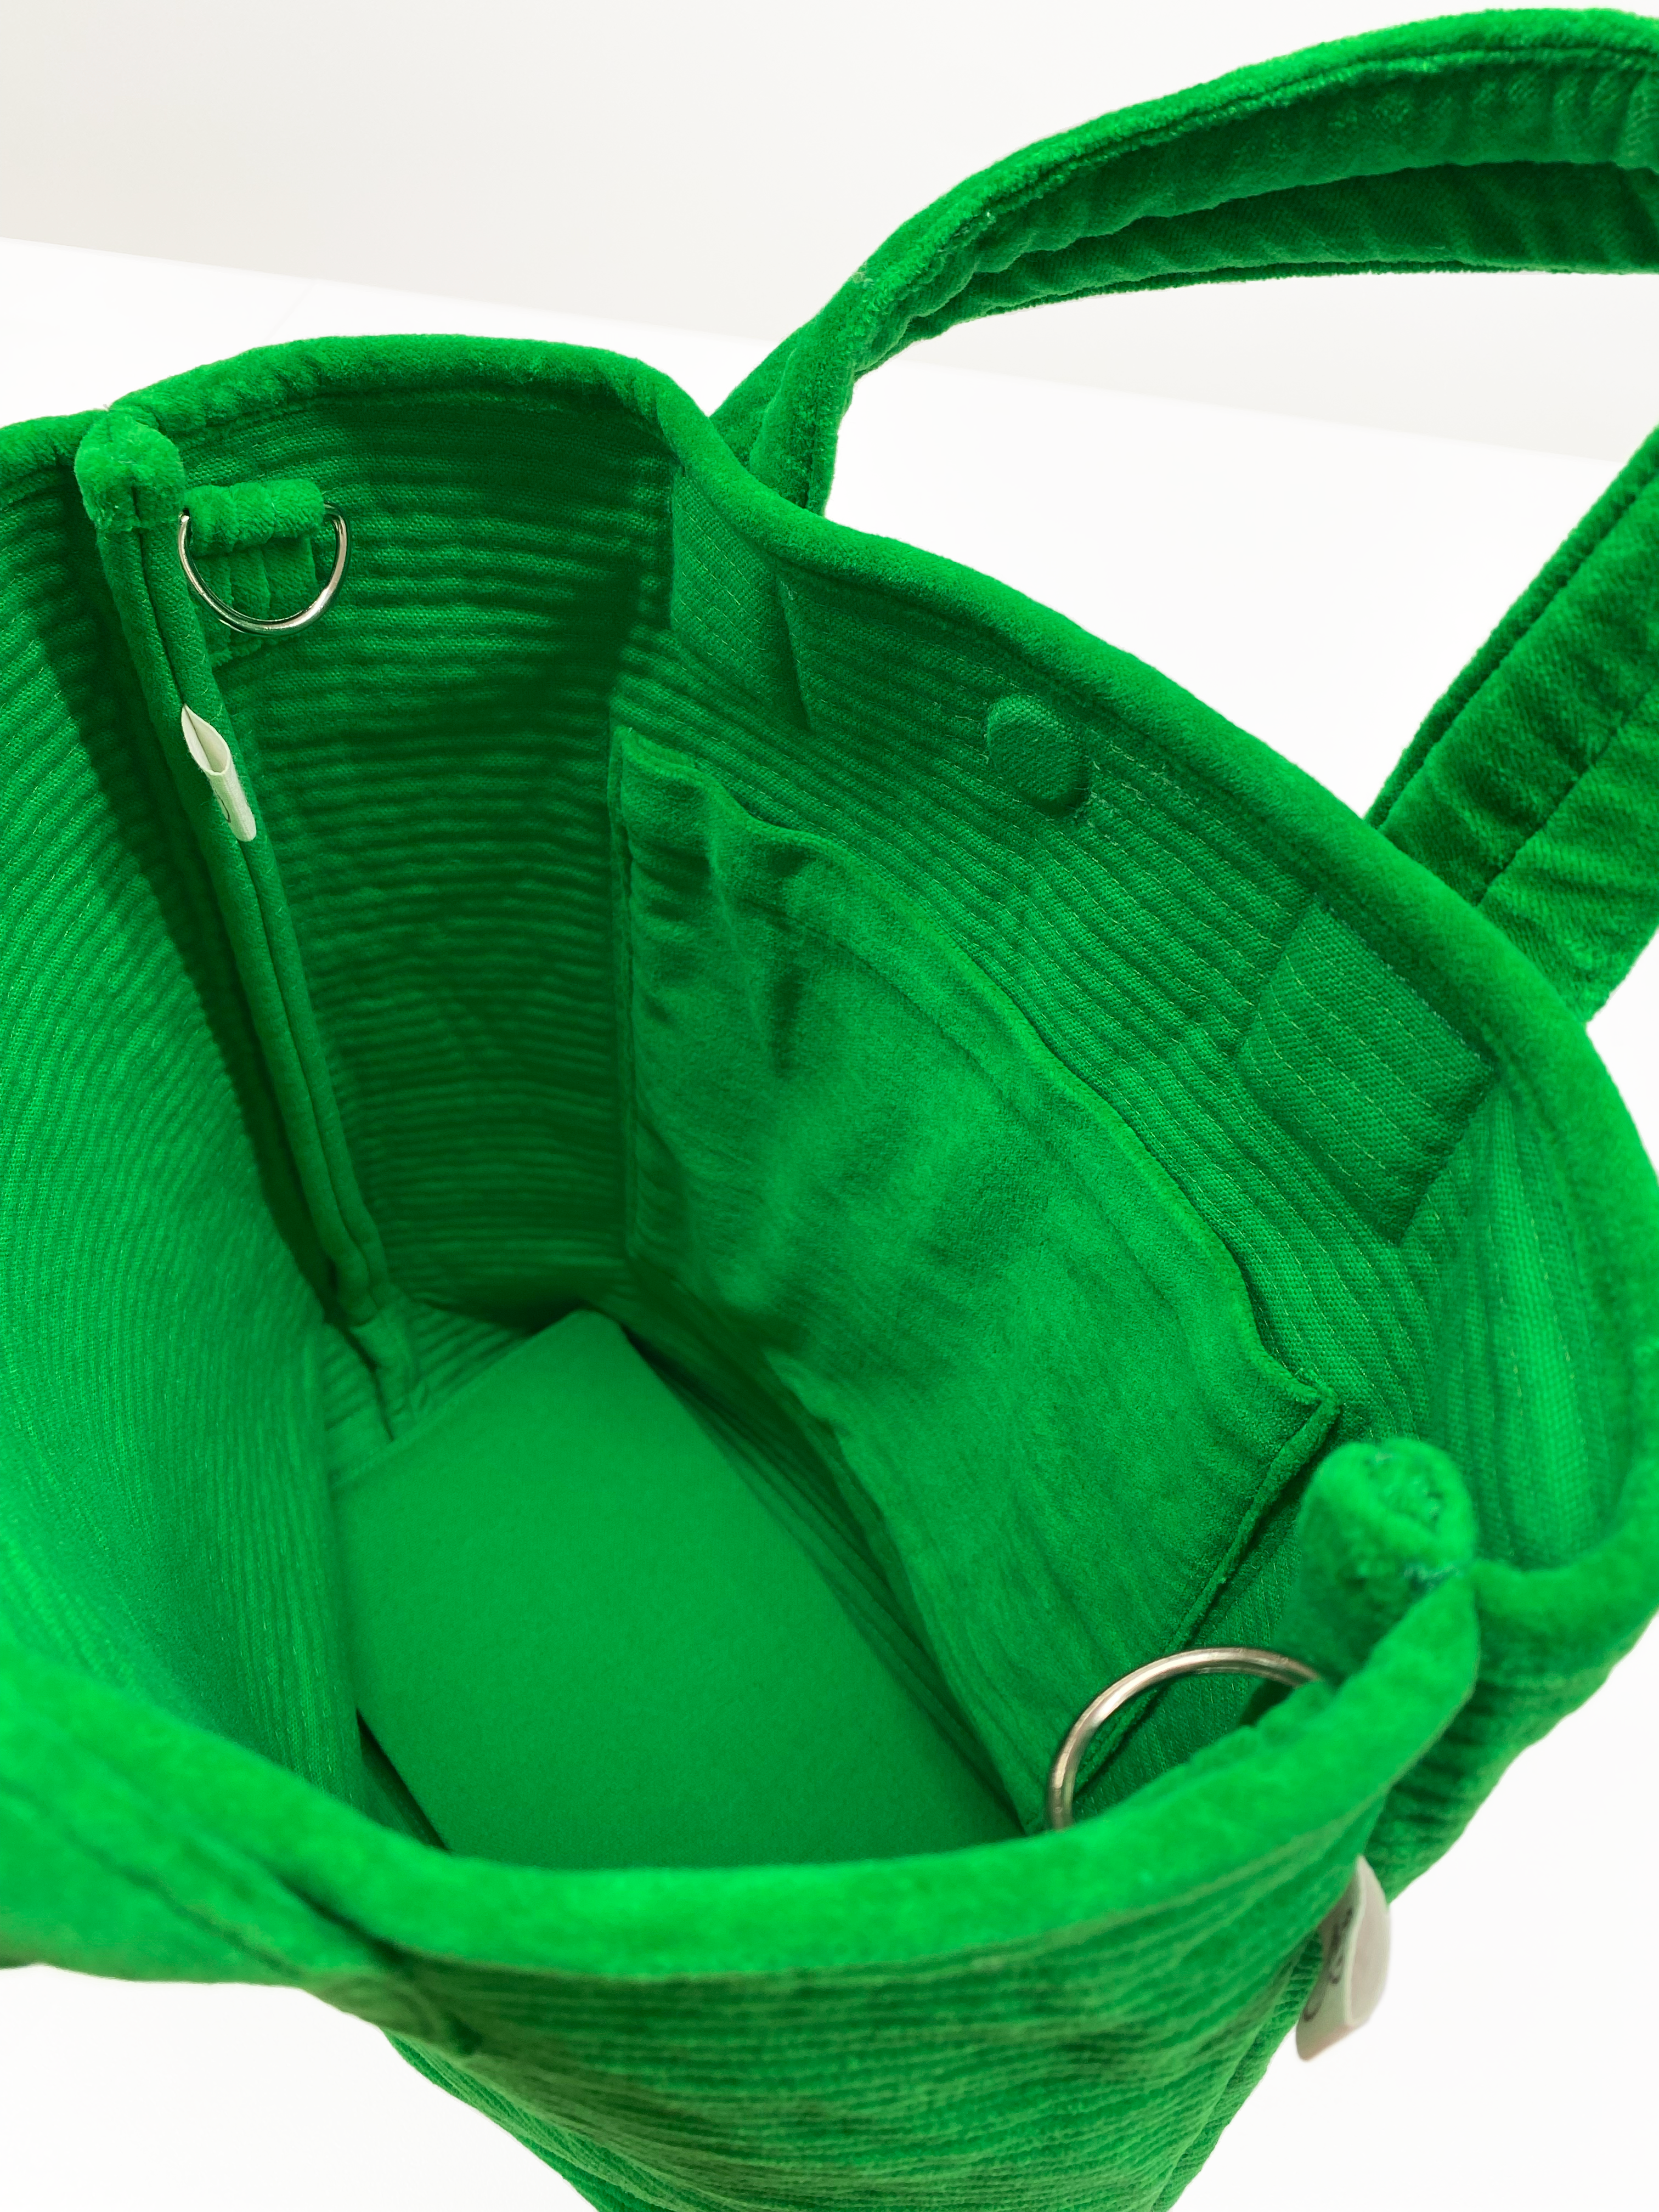 NEW! Quilted Velvet Soho Crossbody Bag - Electric Green - Quilted Koala